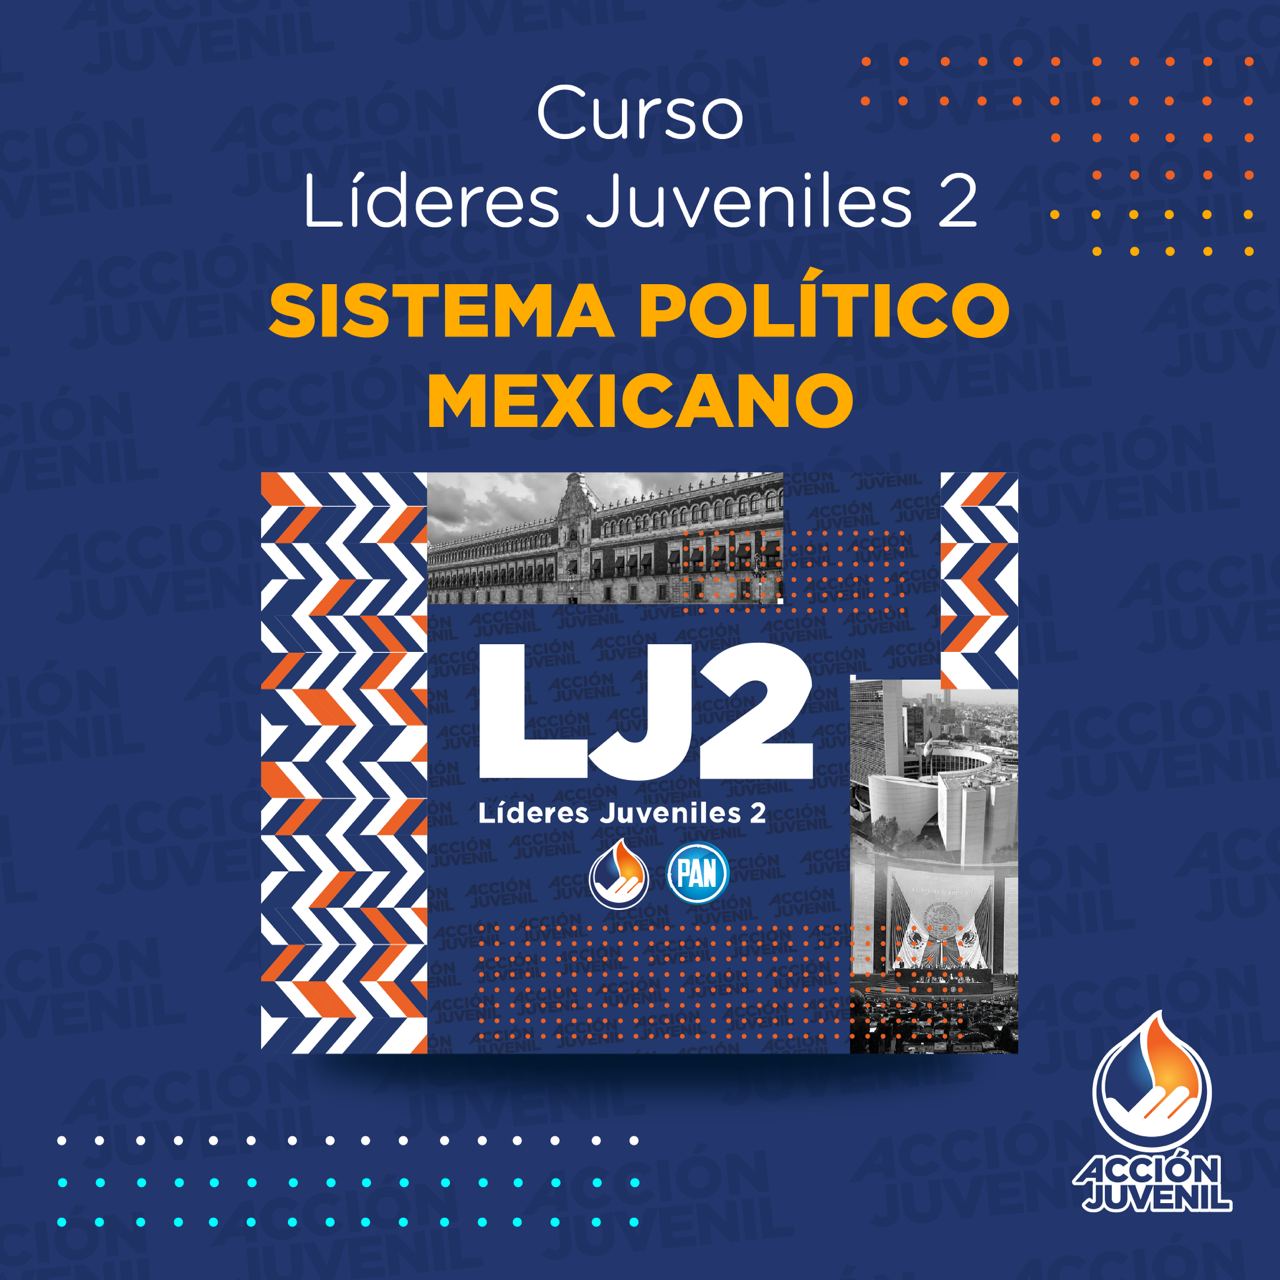 Curso Líderes Juveniles 2 Sistema Político Mexicano Dolores Hidalgo, GTO 06/11/22